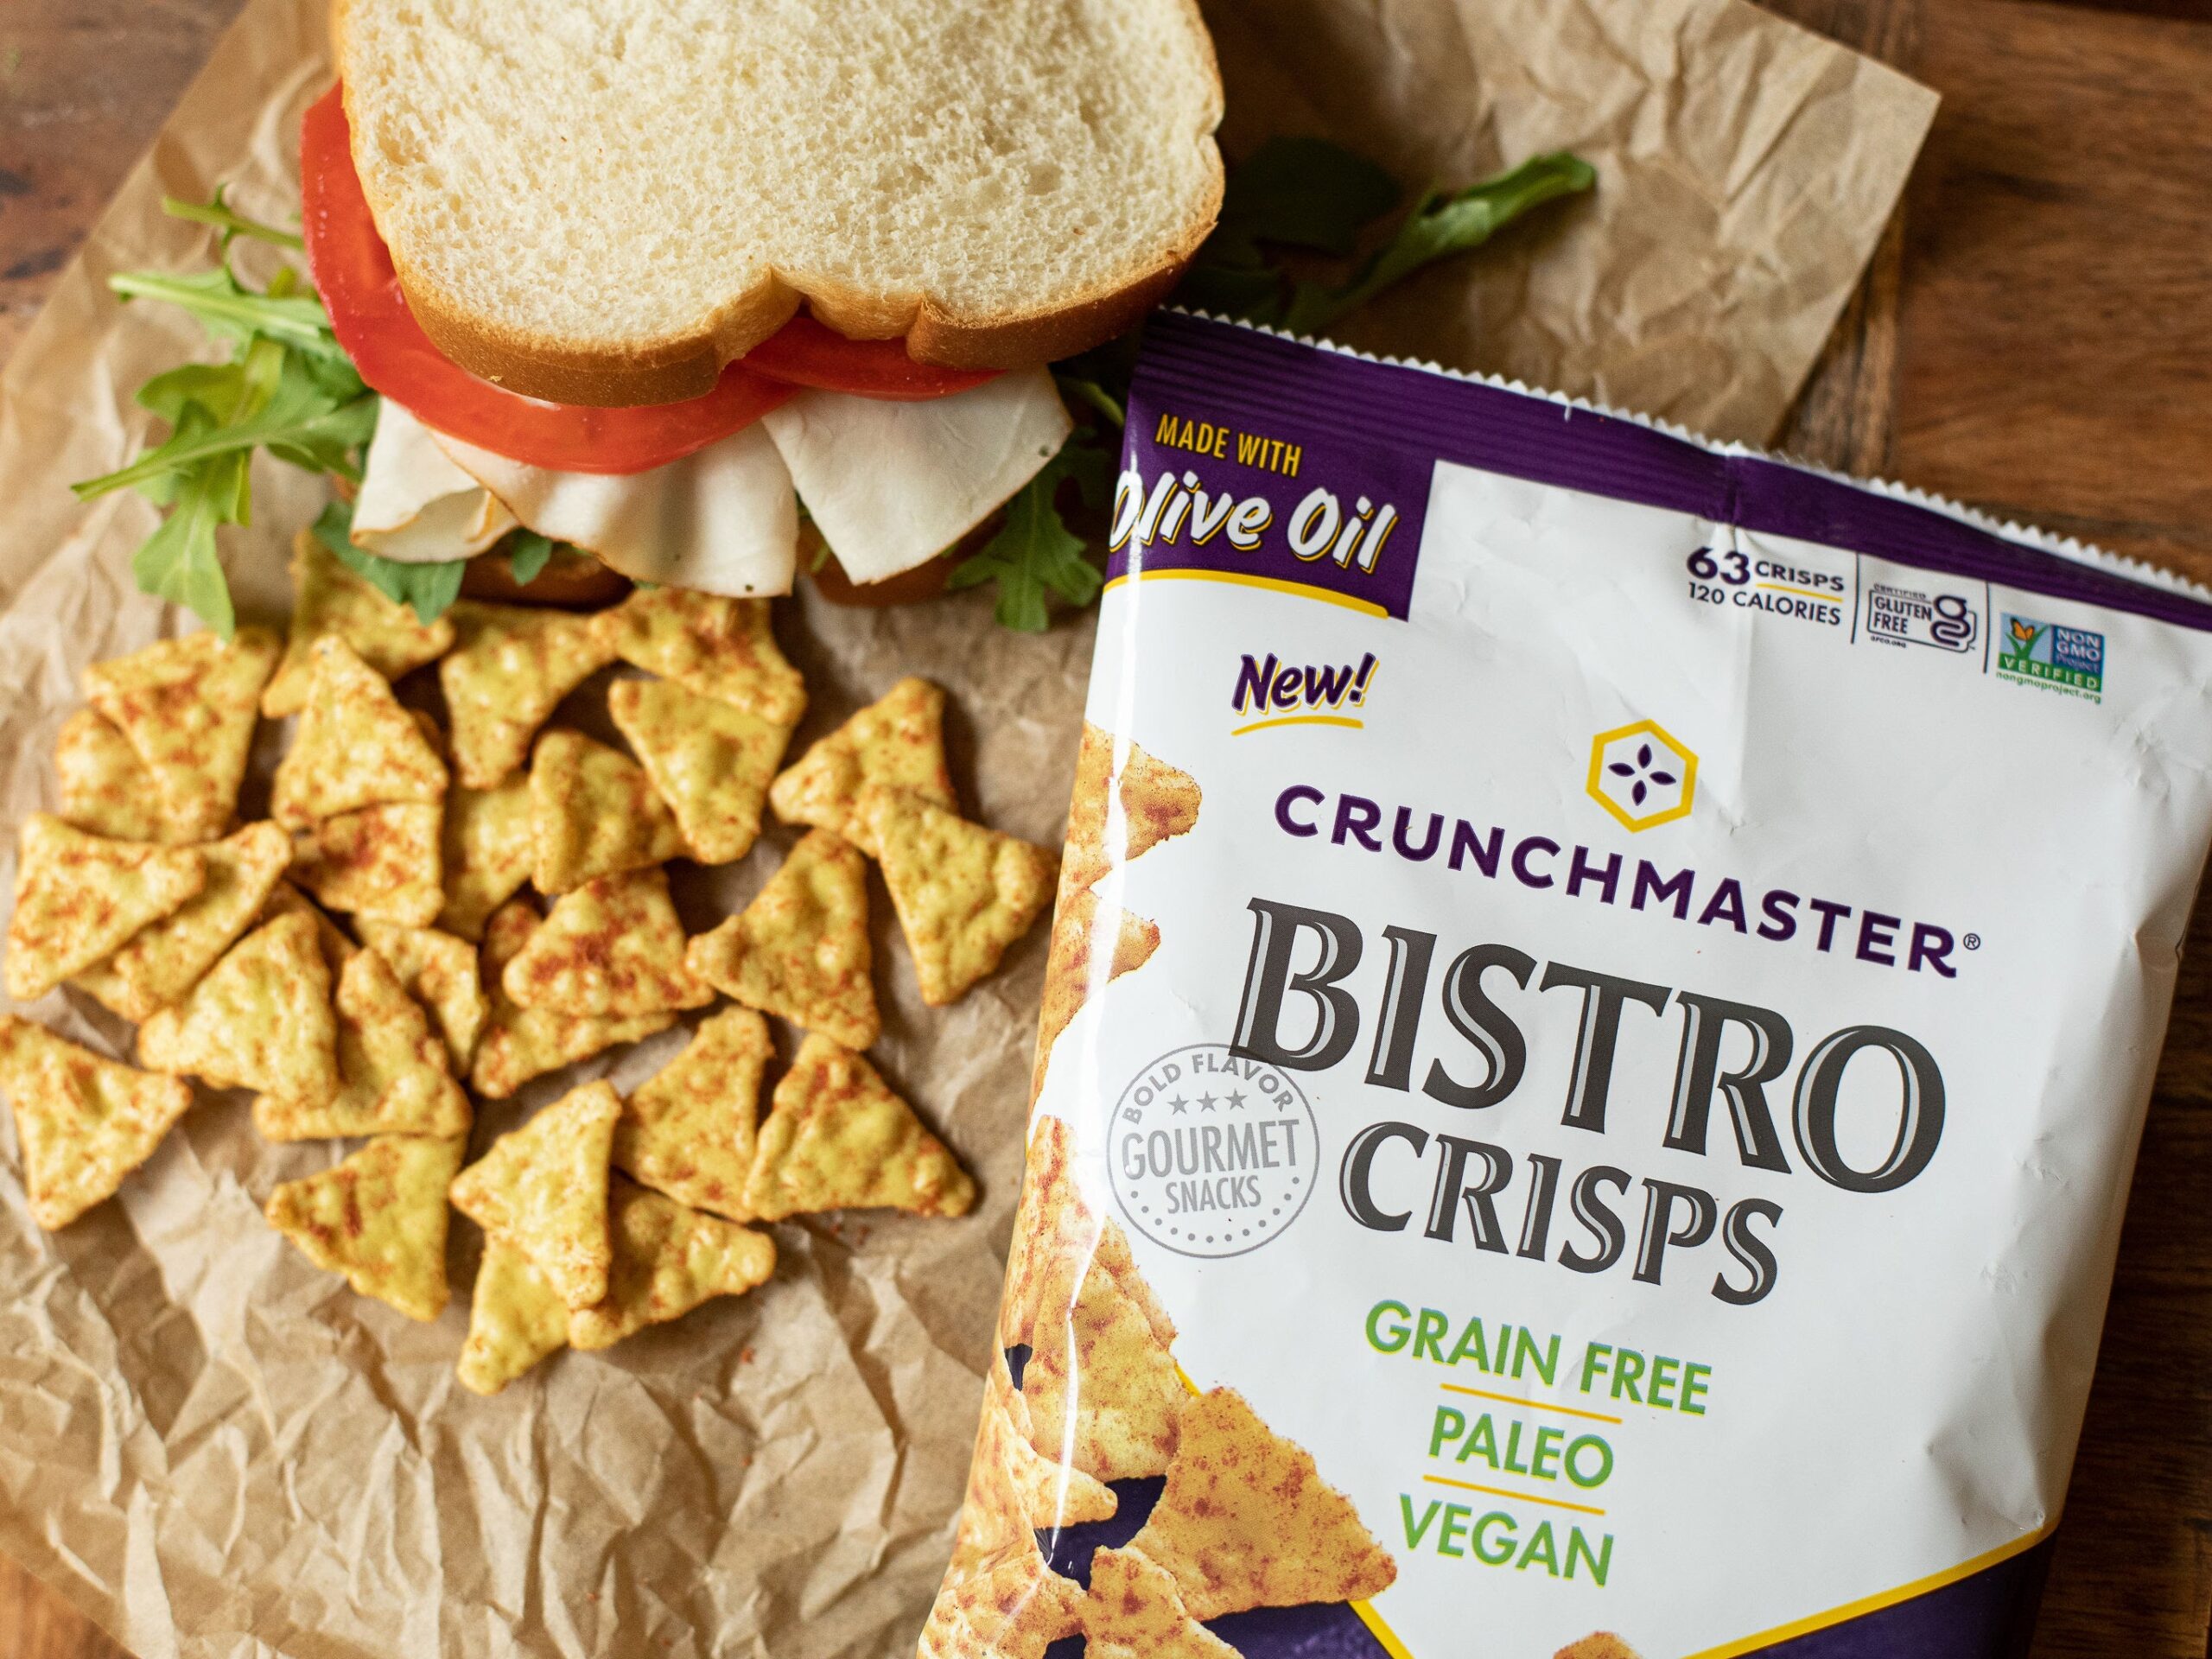 Crunchmaster Bistro Crisps As Low As 66¢ At Publix – Plus Cheap Crackers